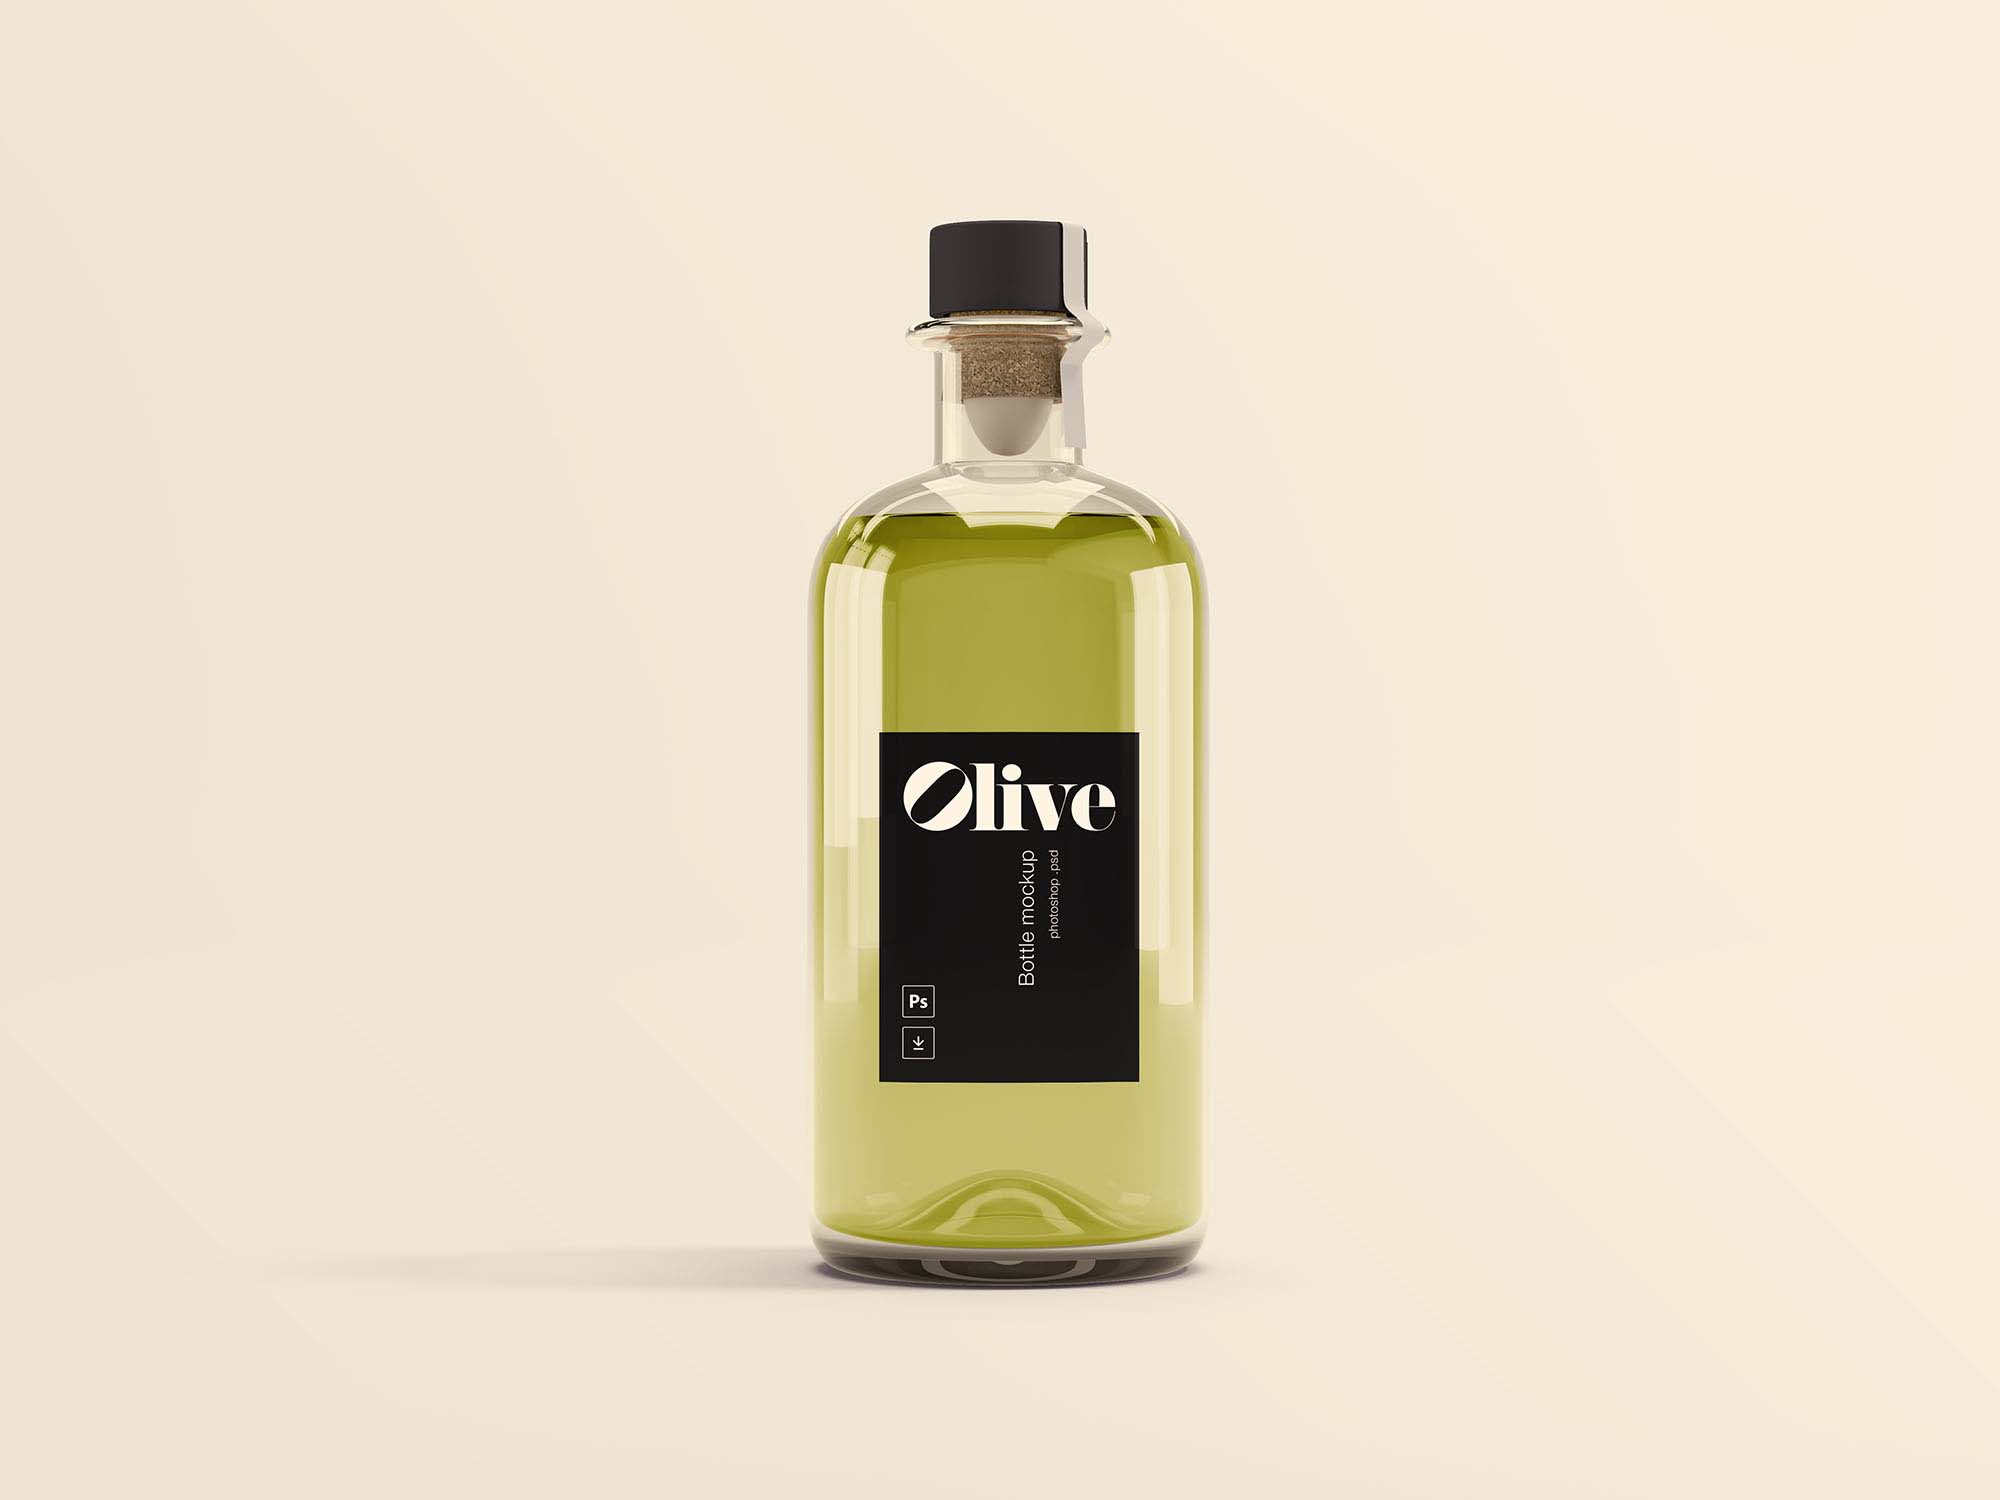 Classic Olive Oil Bottle Mockup